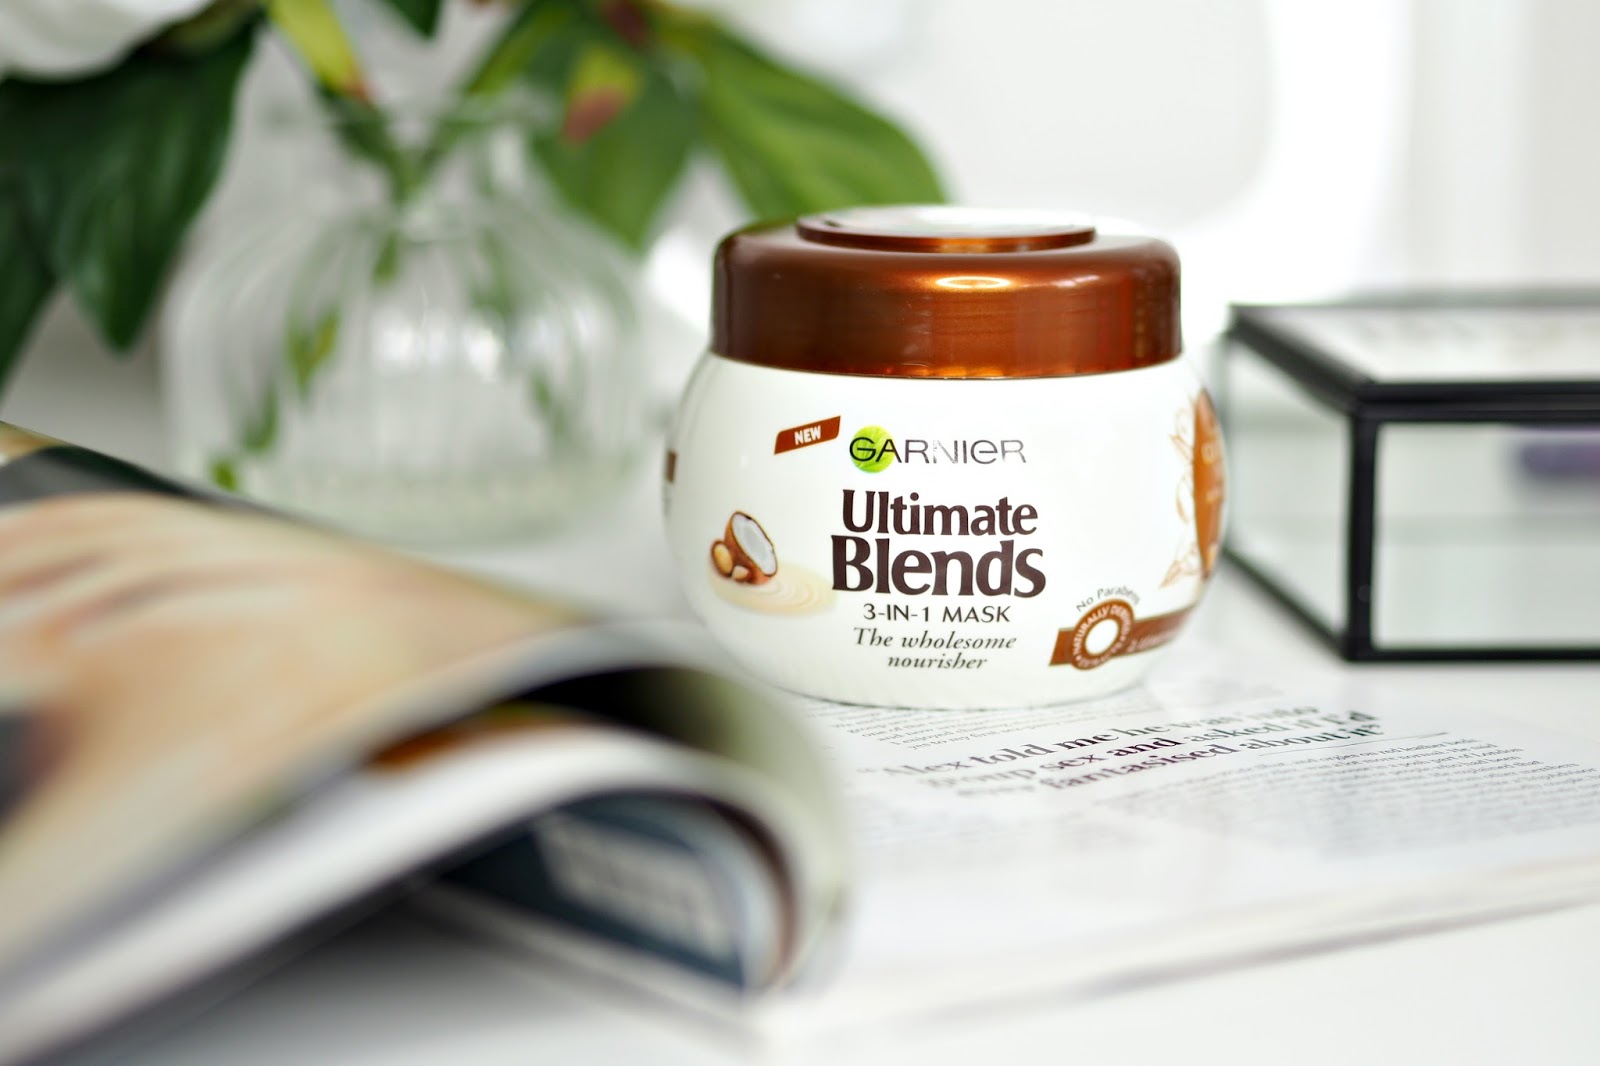 Garnier Ultimate Blends Coconut Milk & Macadamia Oil 3-in-1 Mask